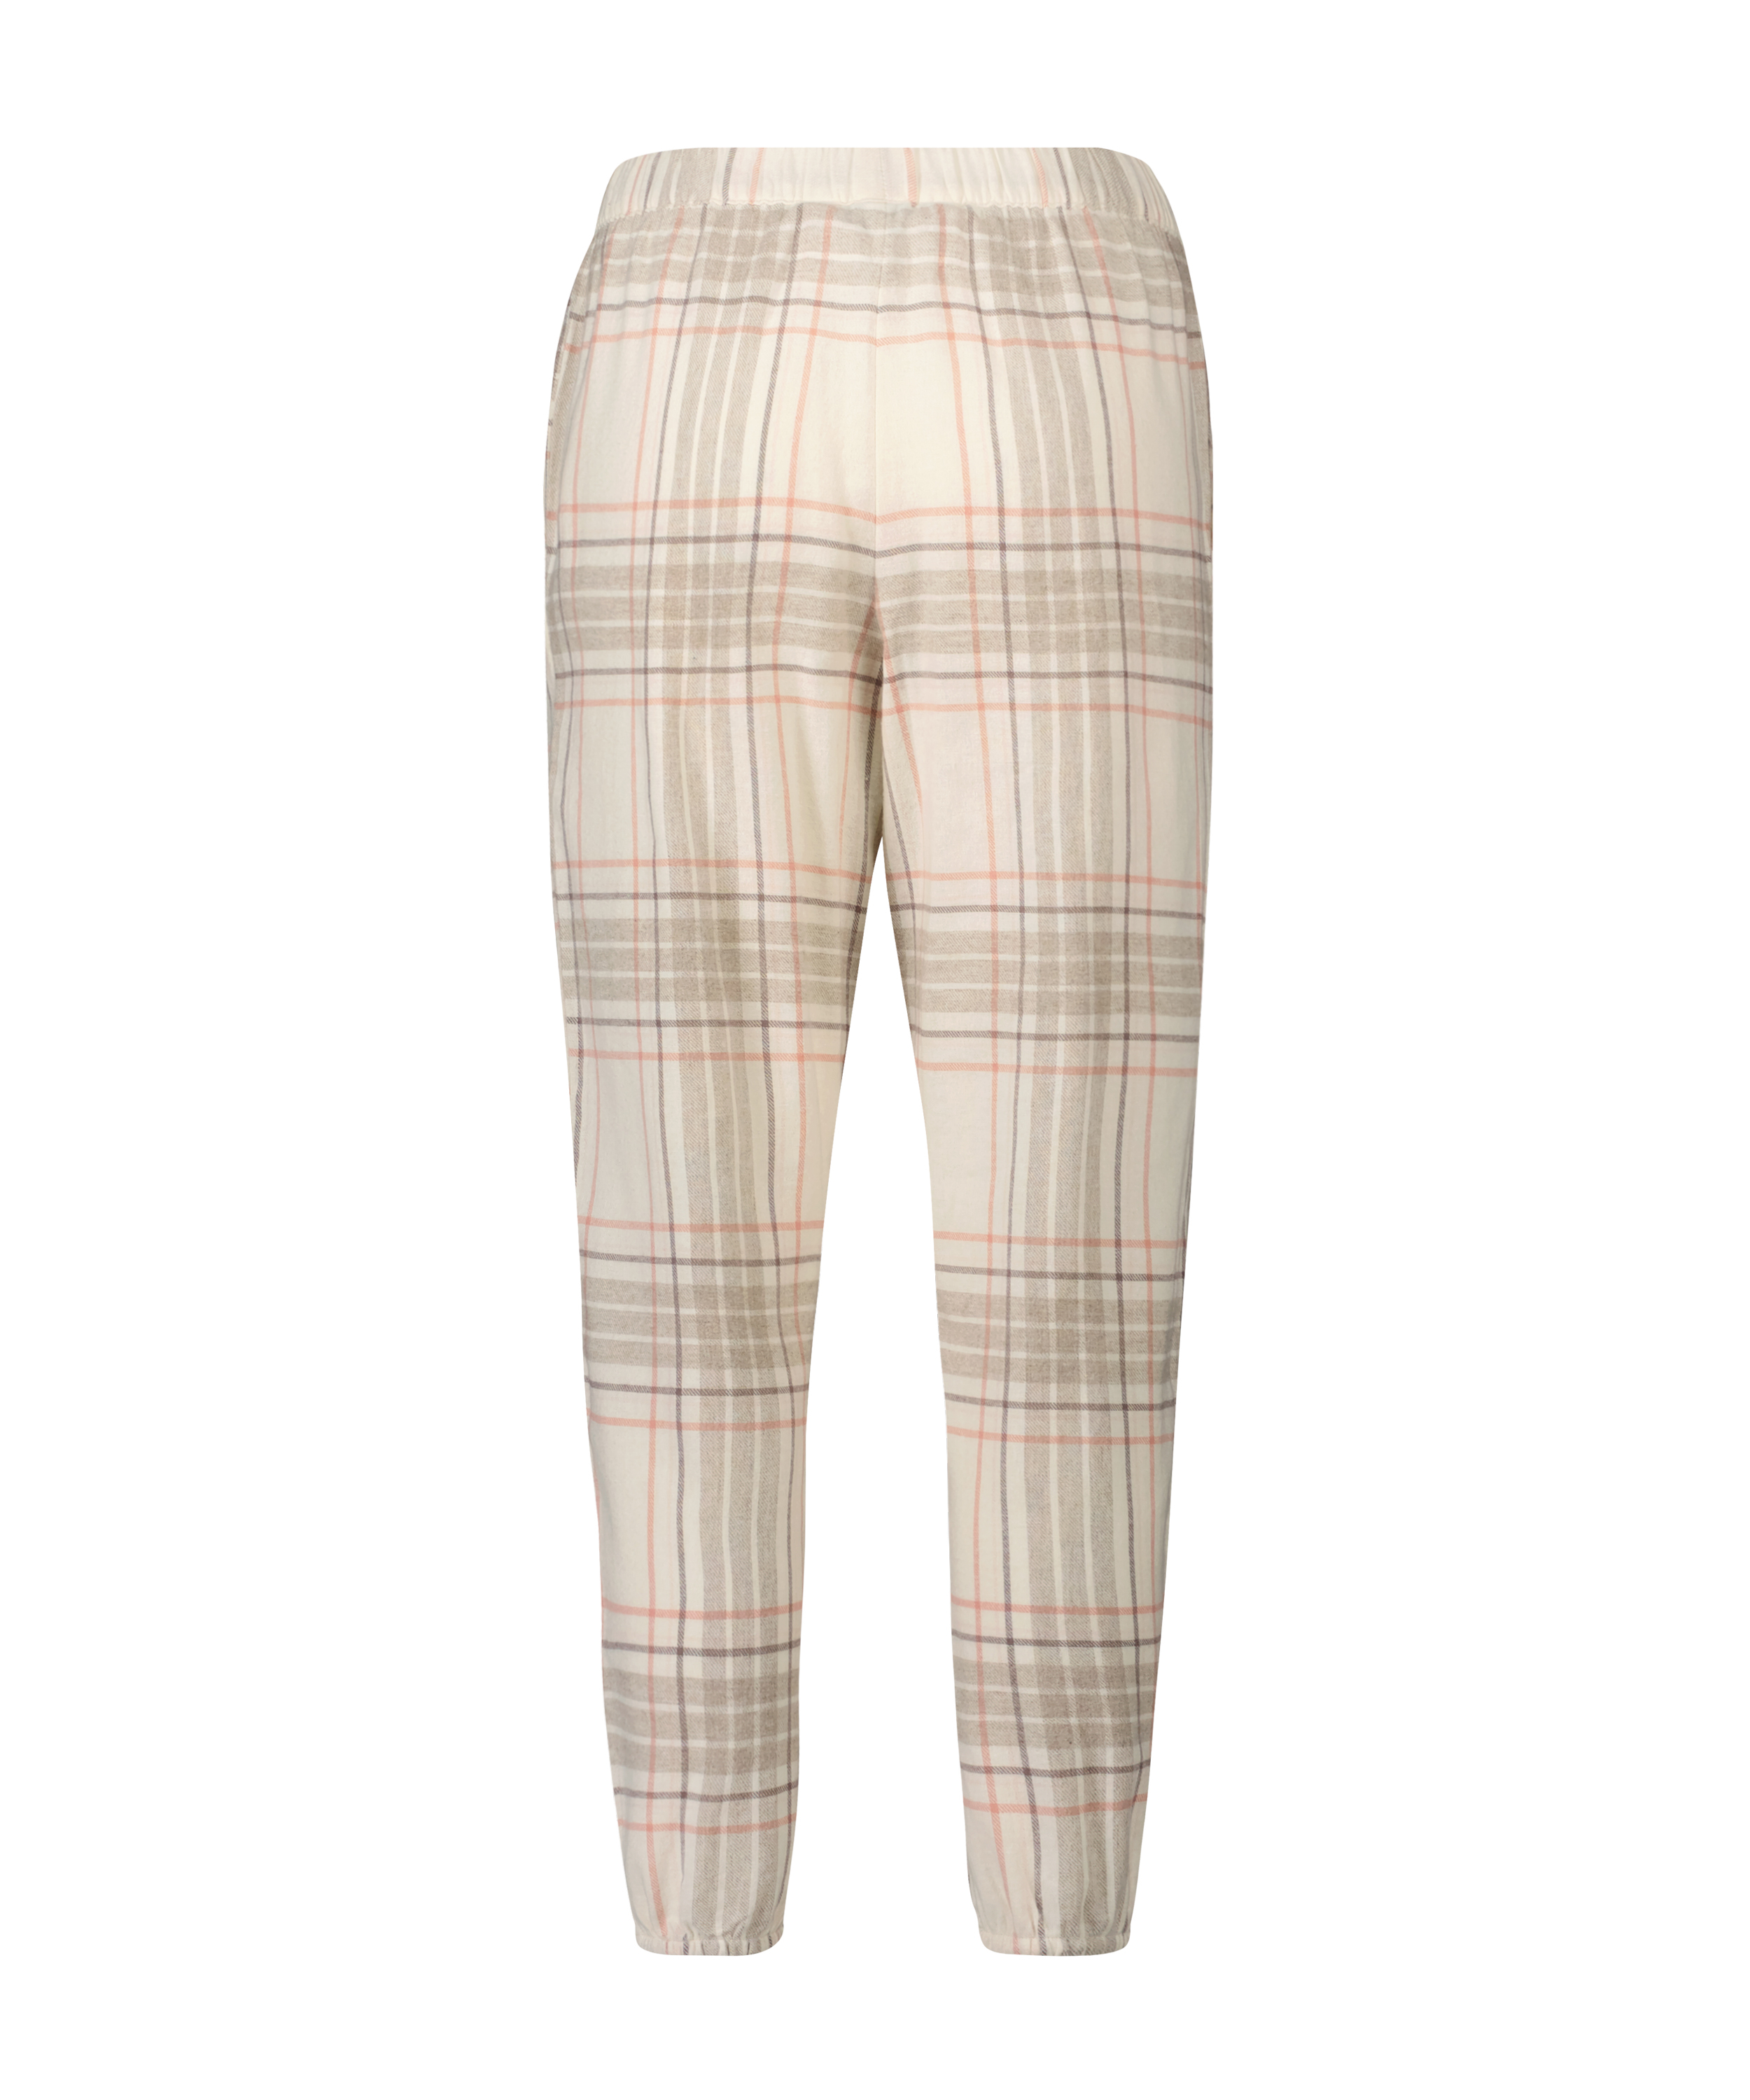 Petite Twill Check Pyjama pants, Grey, main